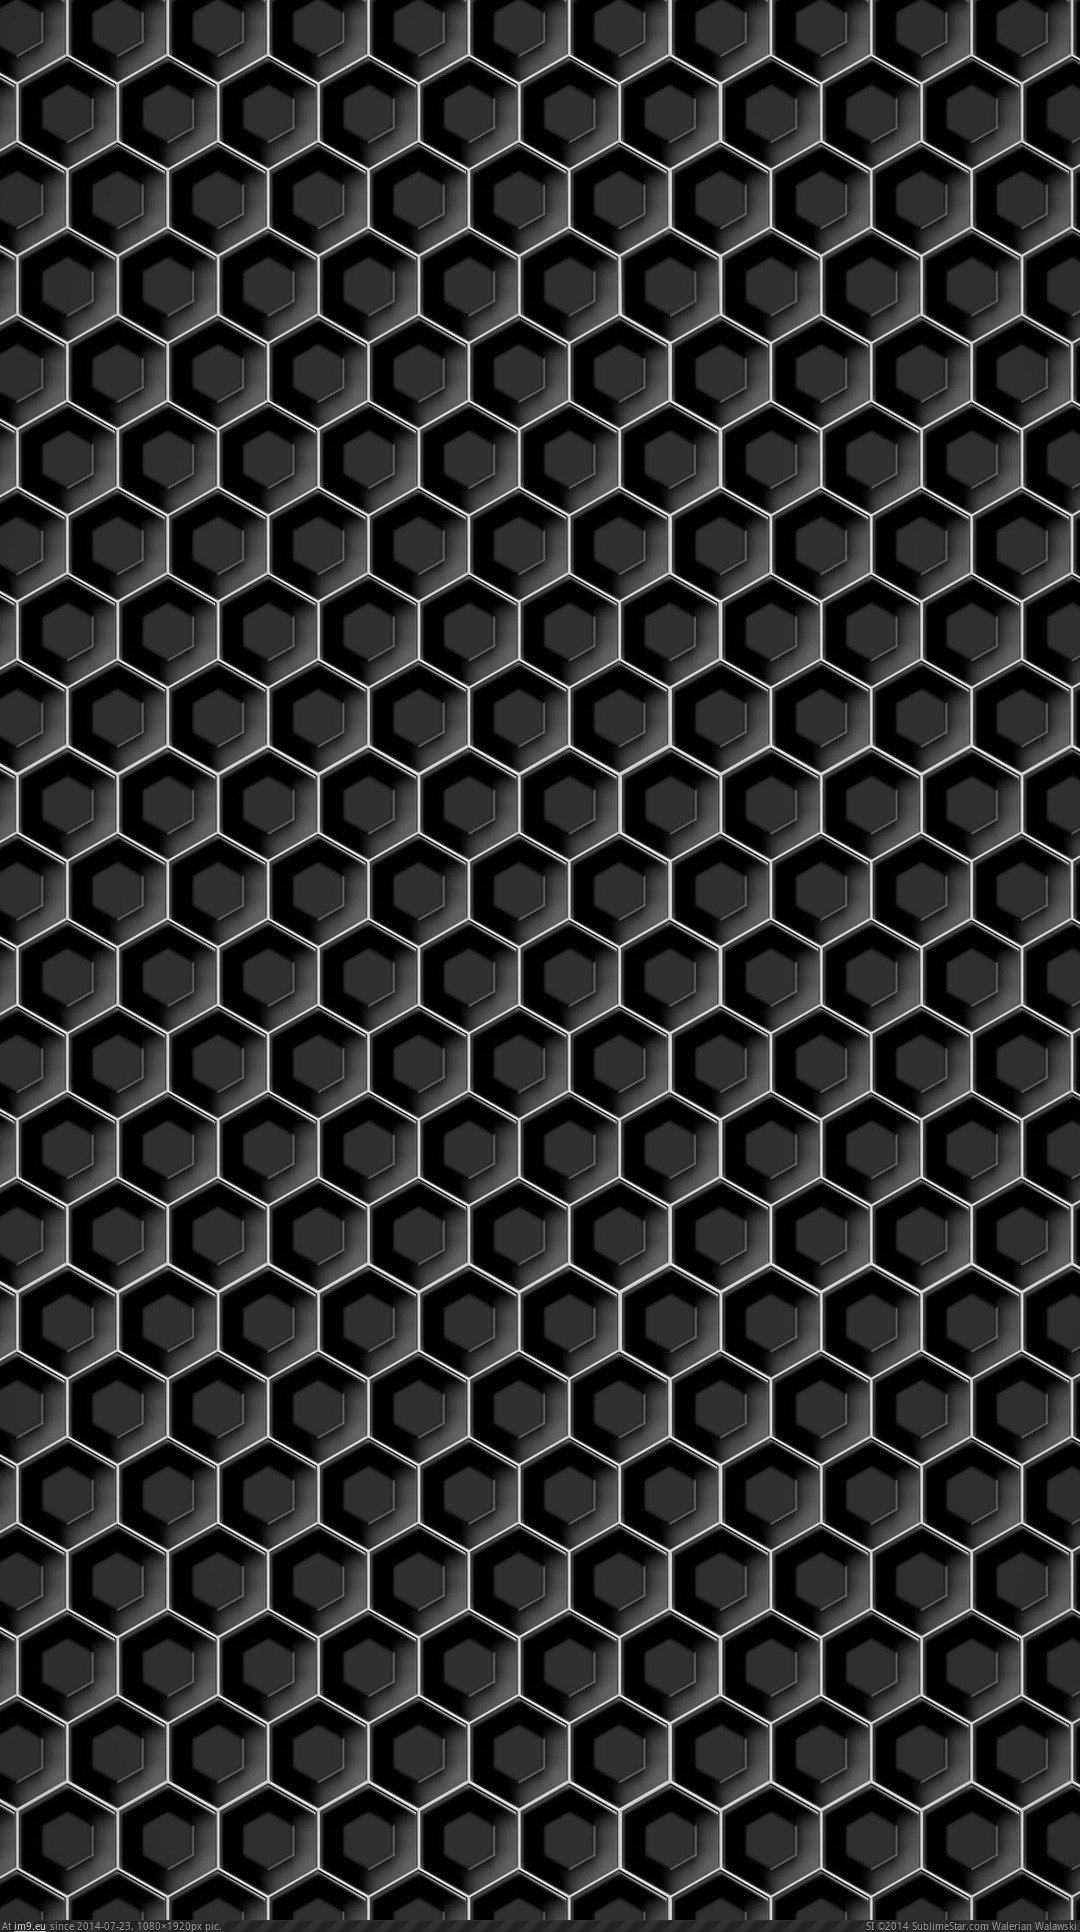 metallic-black-hexagons-abstract-hd-wallpaper-1920x1080-8068 (in Idol6040Dpics)